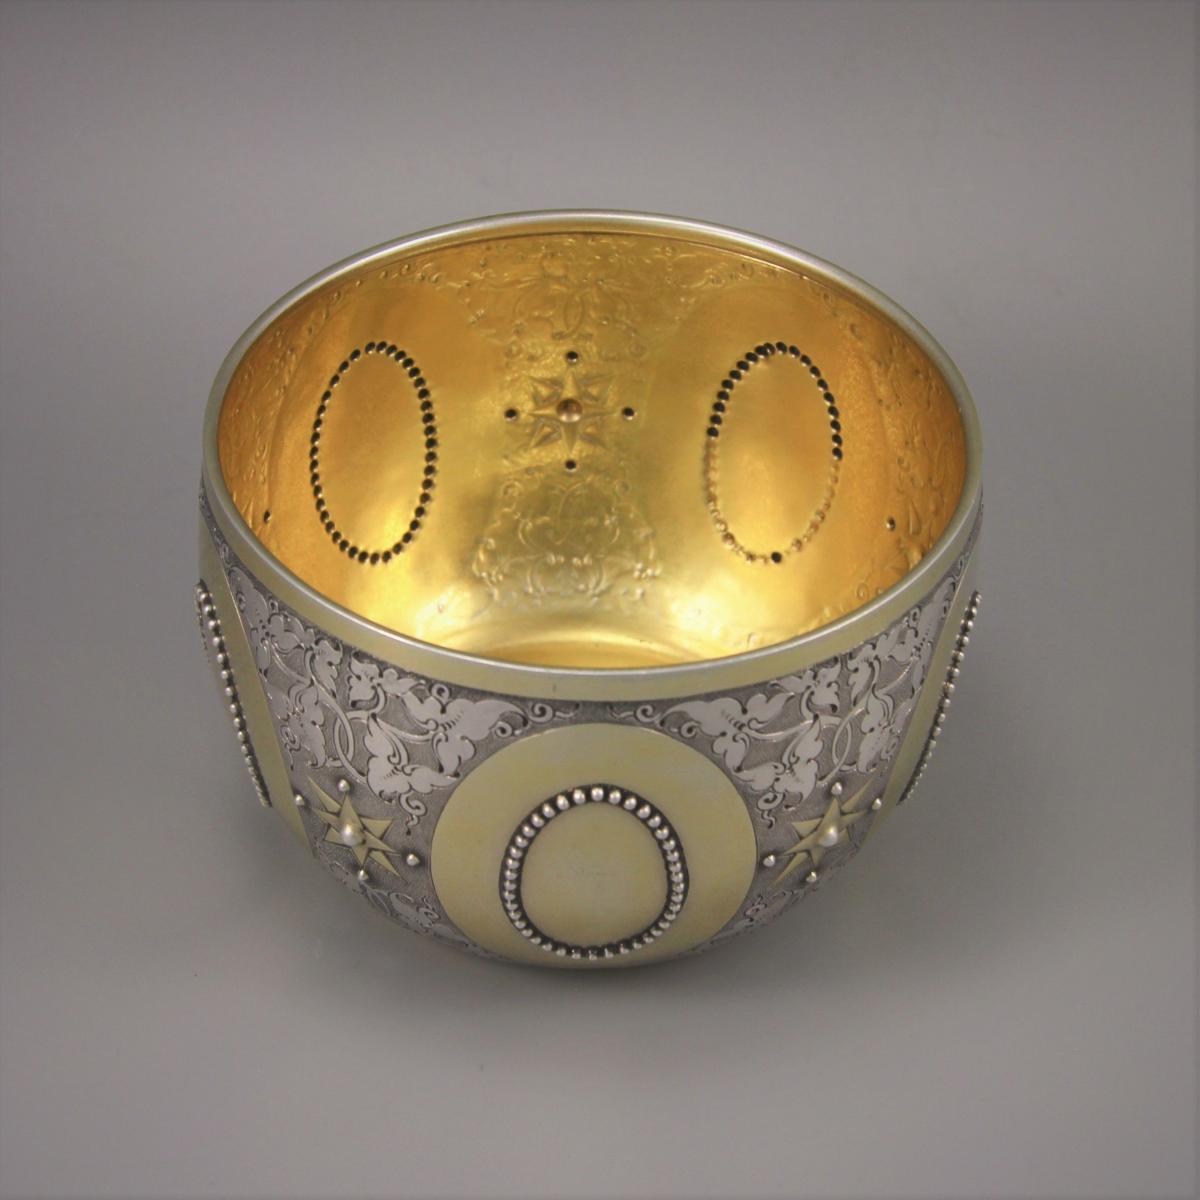 VICTORIAN Parcel-Gilt Bowl by GEORGE FOX. London 1873